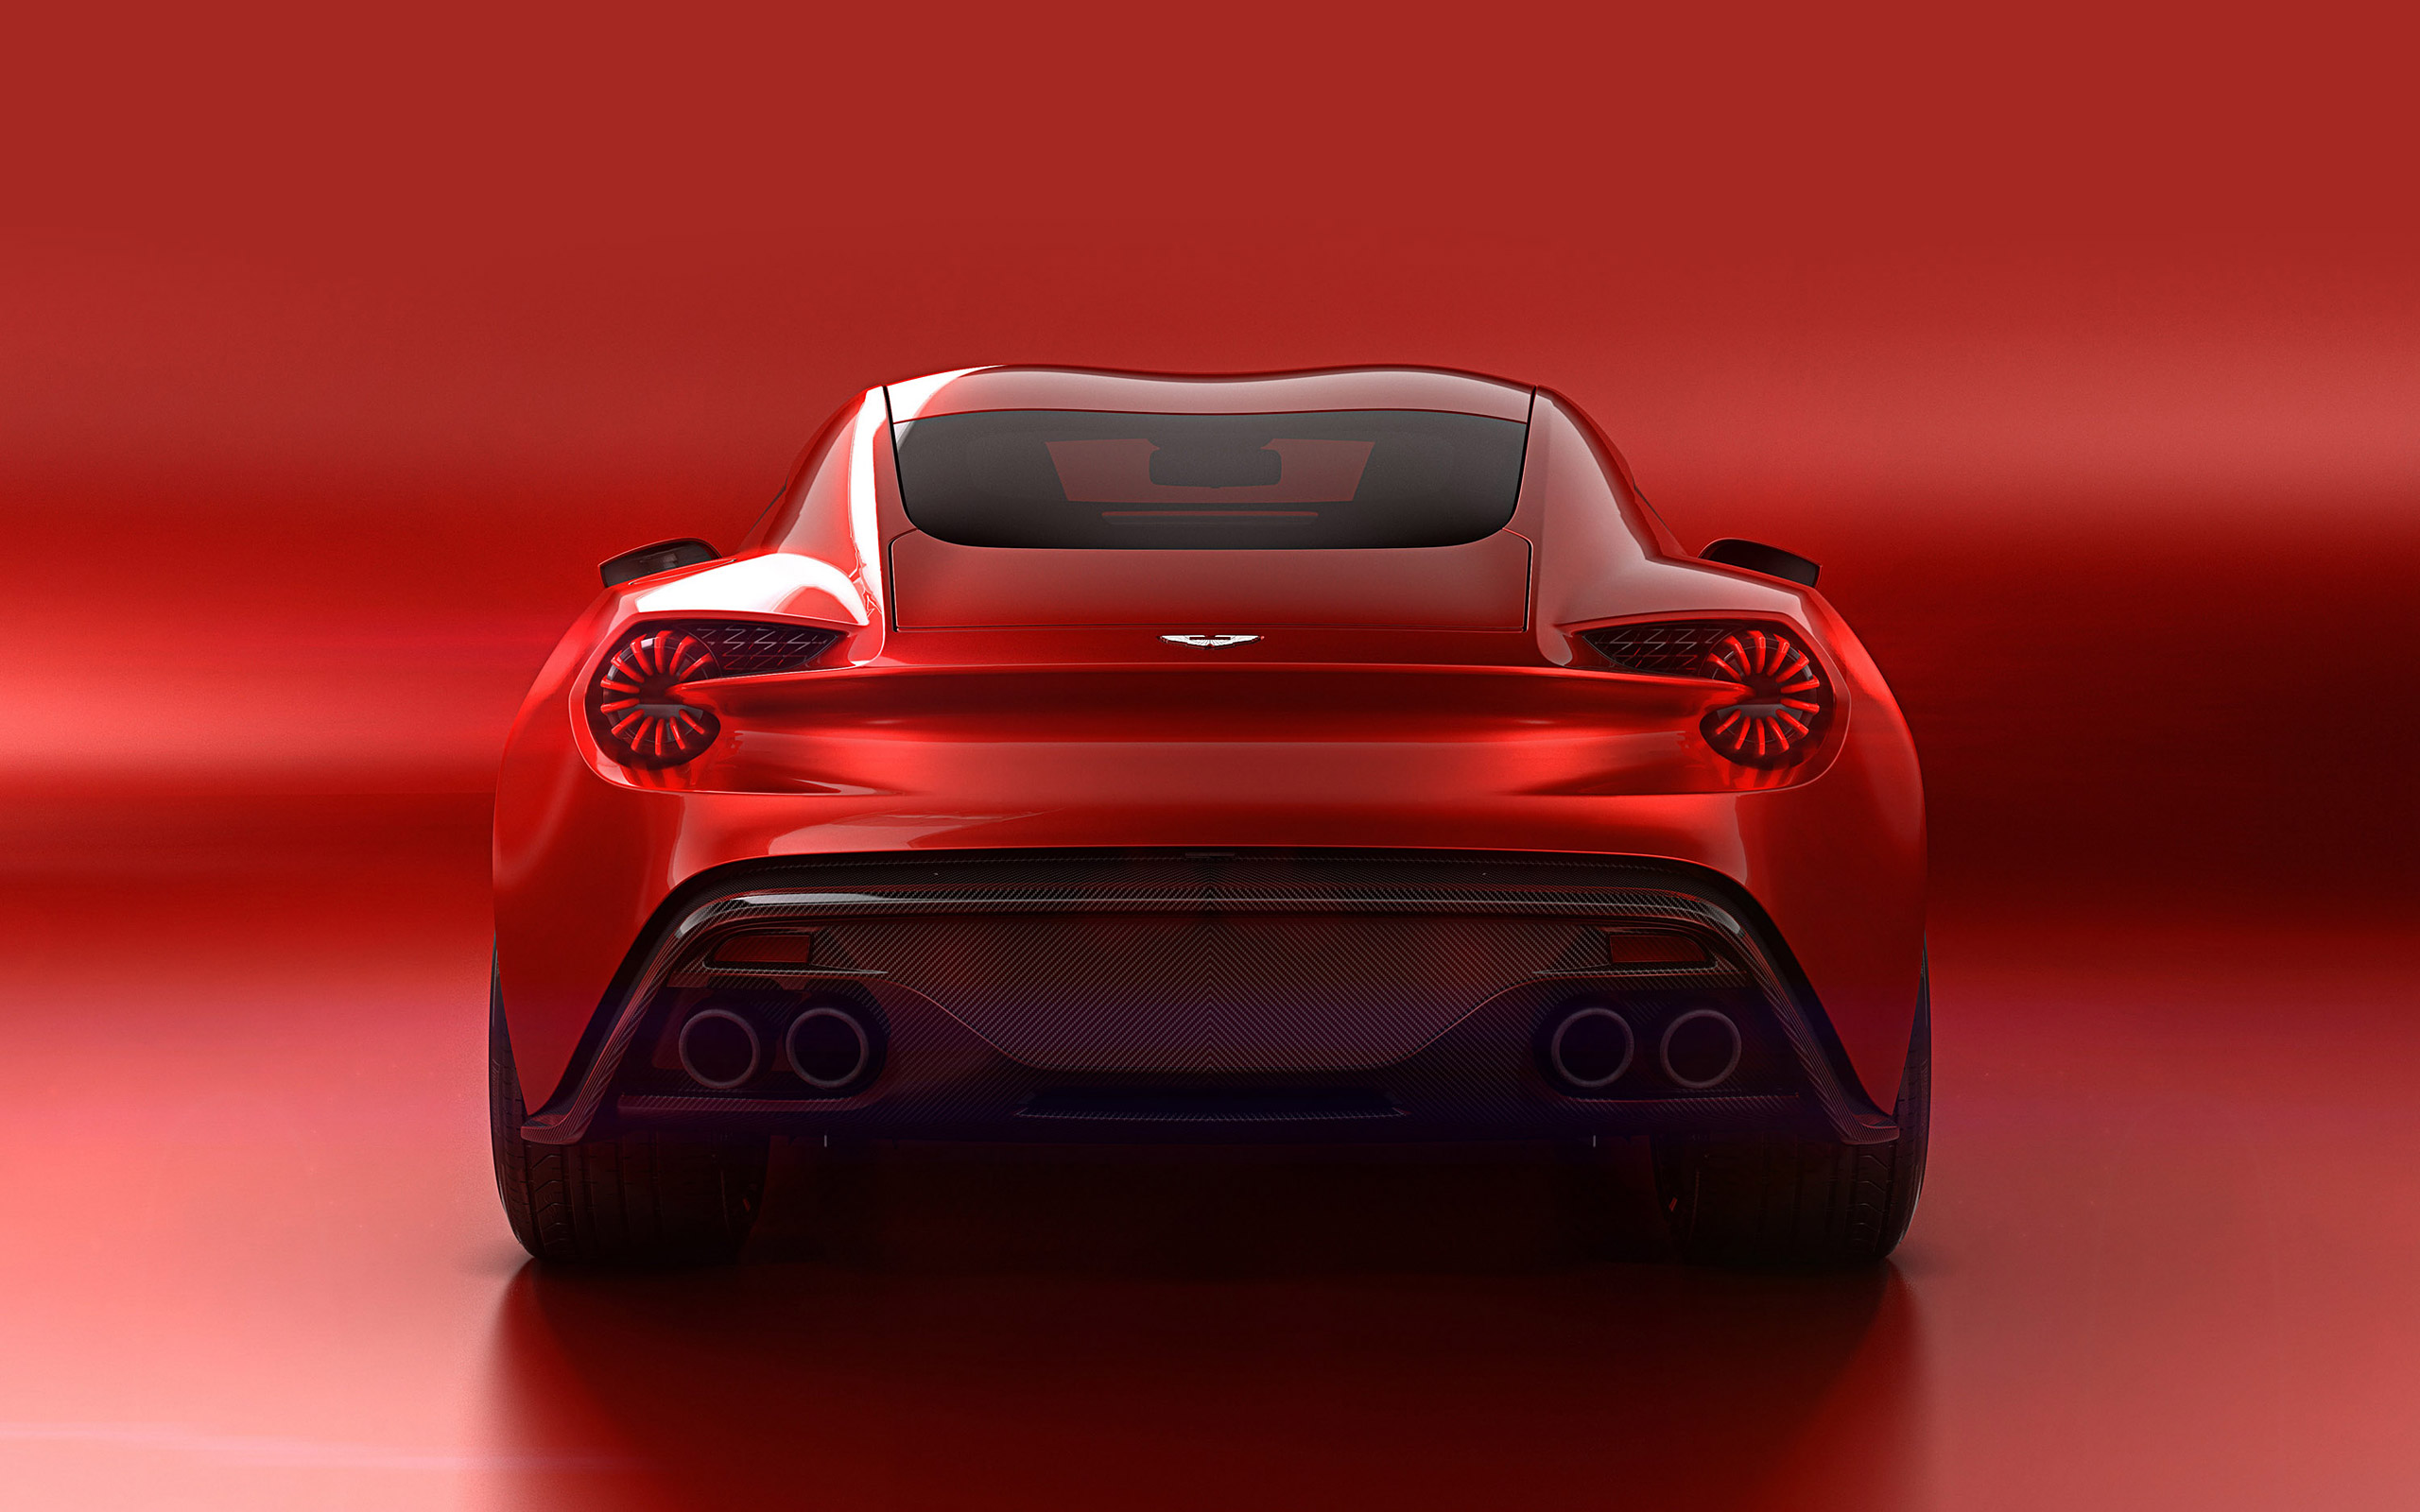 Aston Martin Vanquish Zagato Sports Car Rear View Studio Red Cars Vehicle Simple Background Minimali 2560x1600